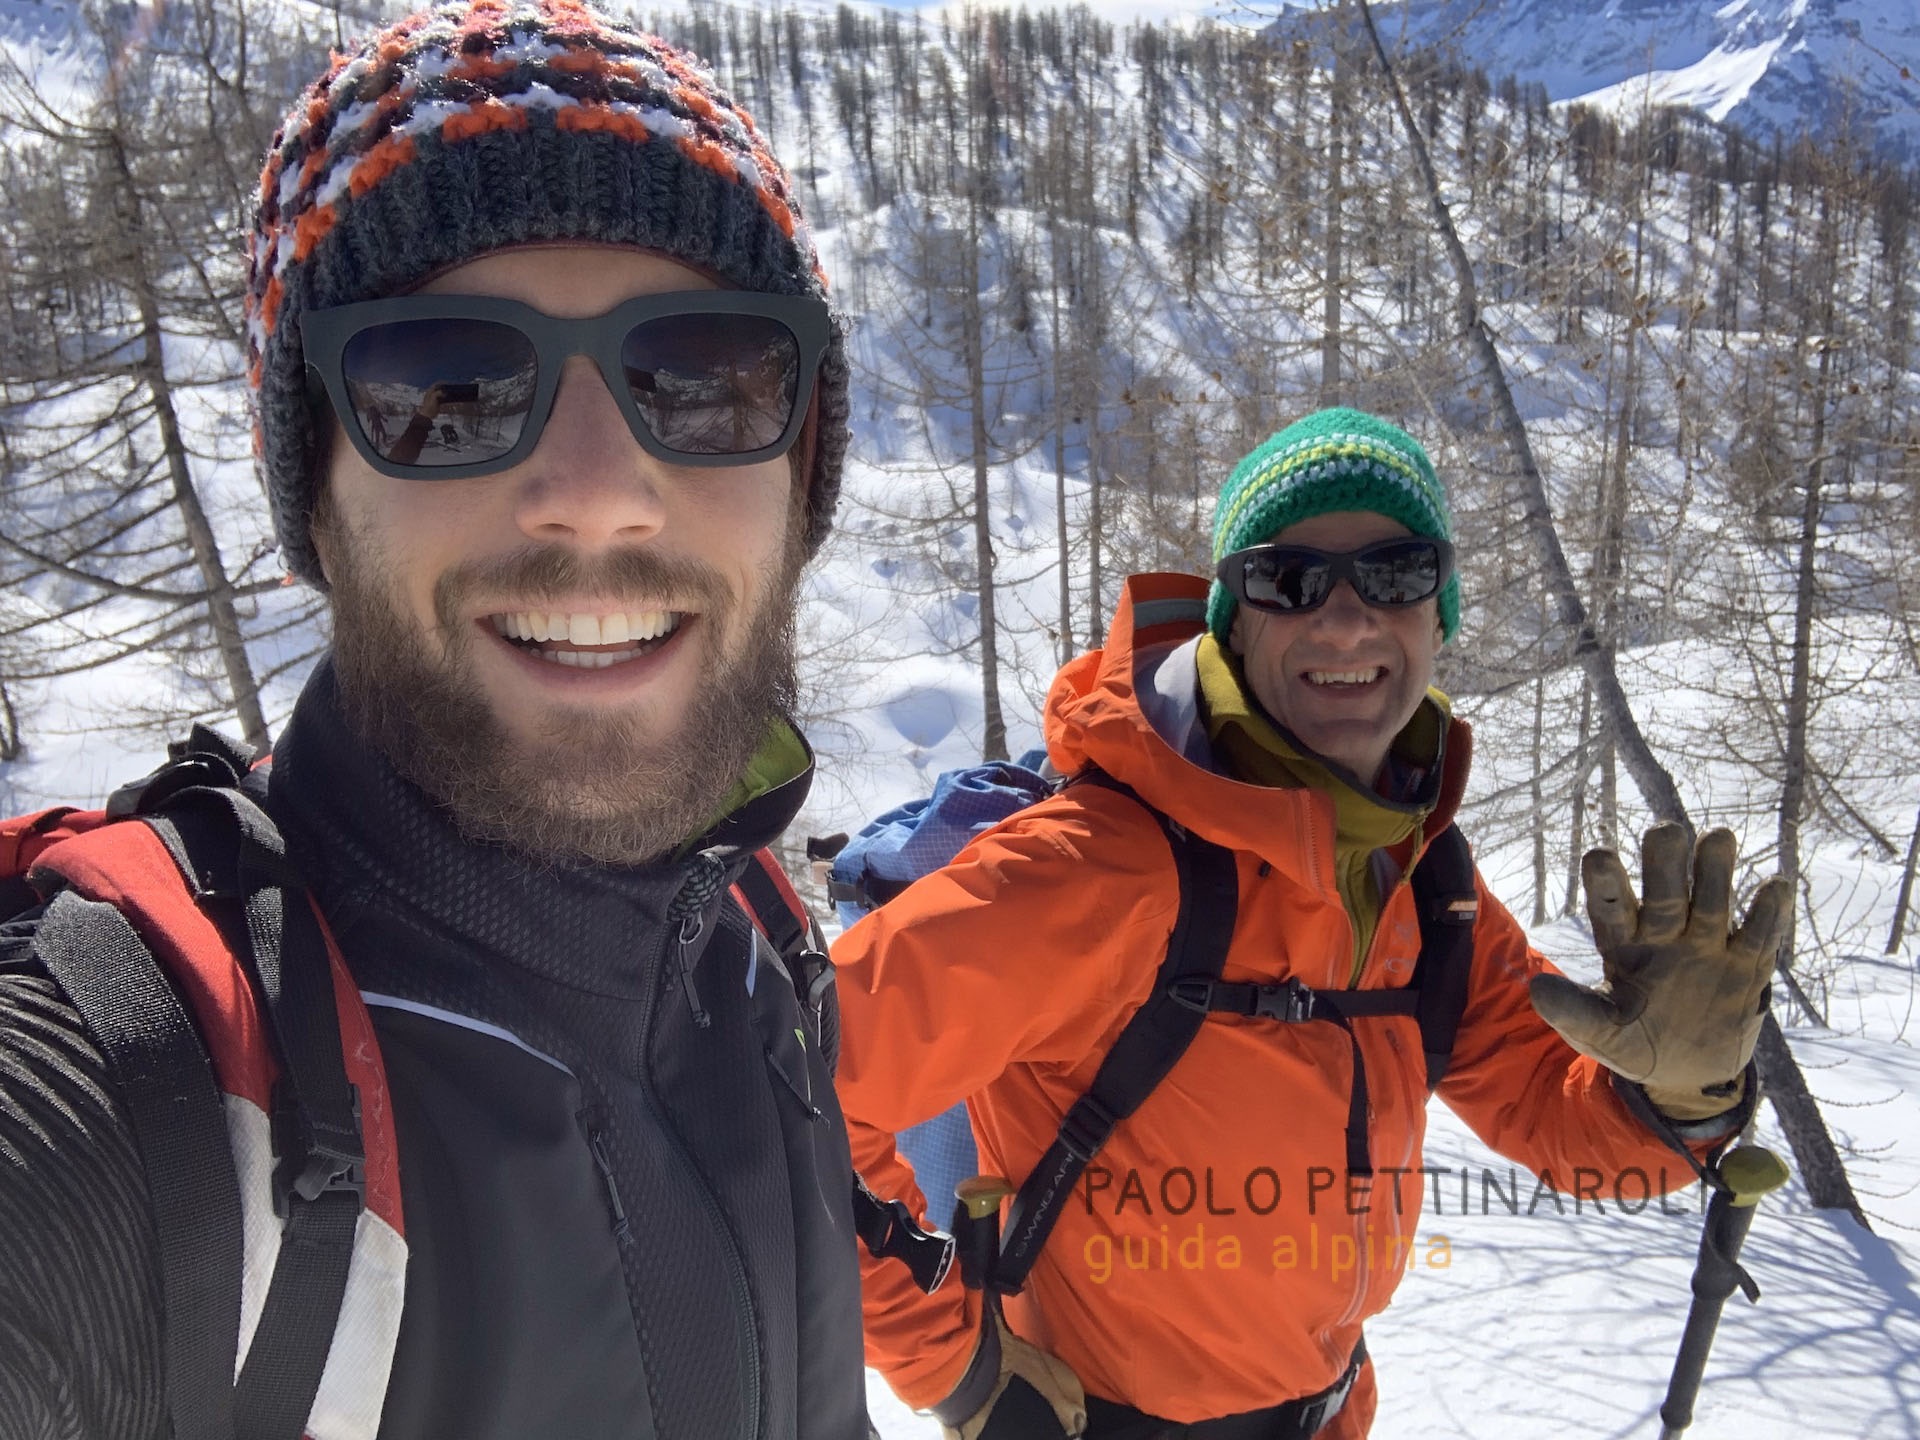 IMG_9832-scialpinismo_paolo pettinaroli guida alpina